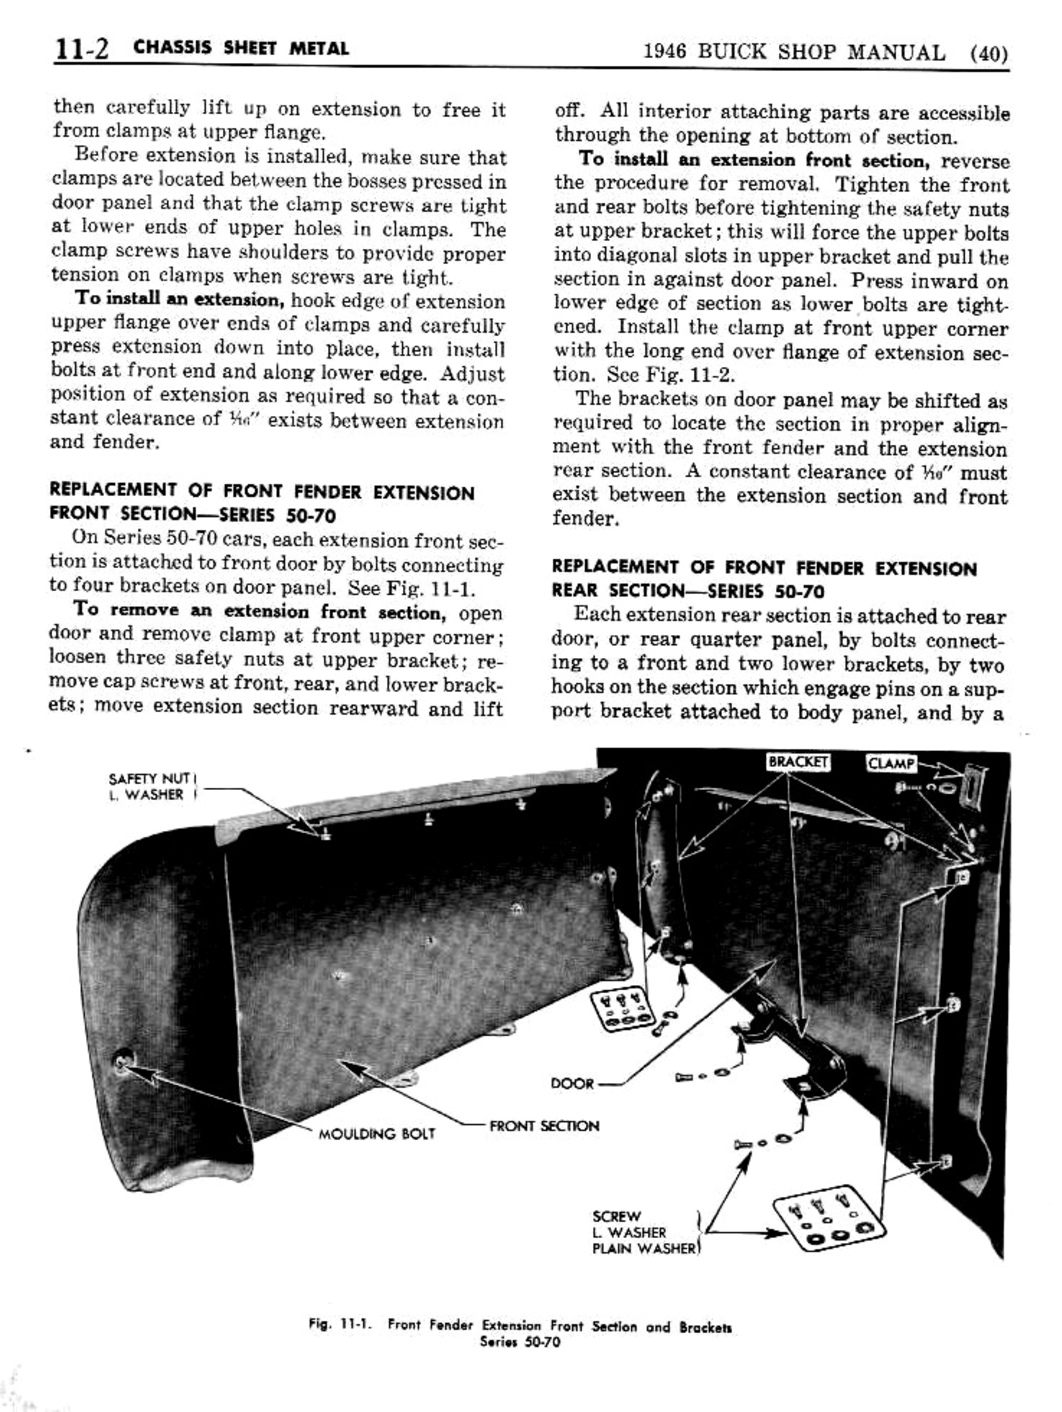 n_11 1946 Buick Shop Manual - Chassis Sheet Metal-002-002.jpg